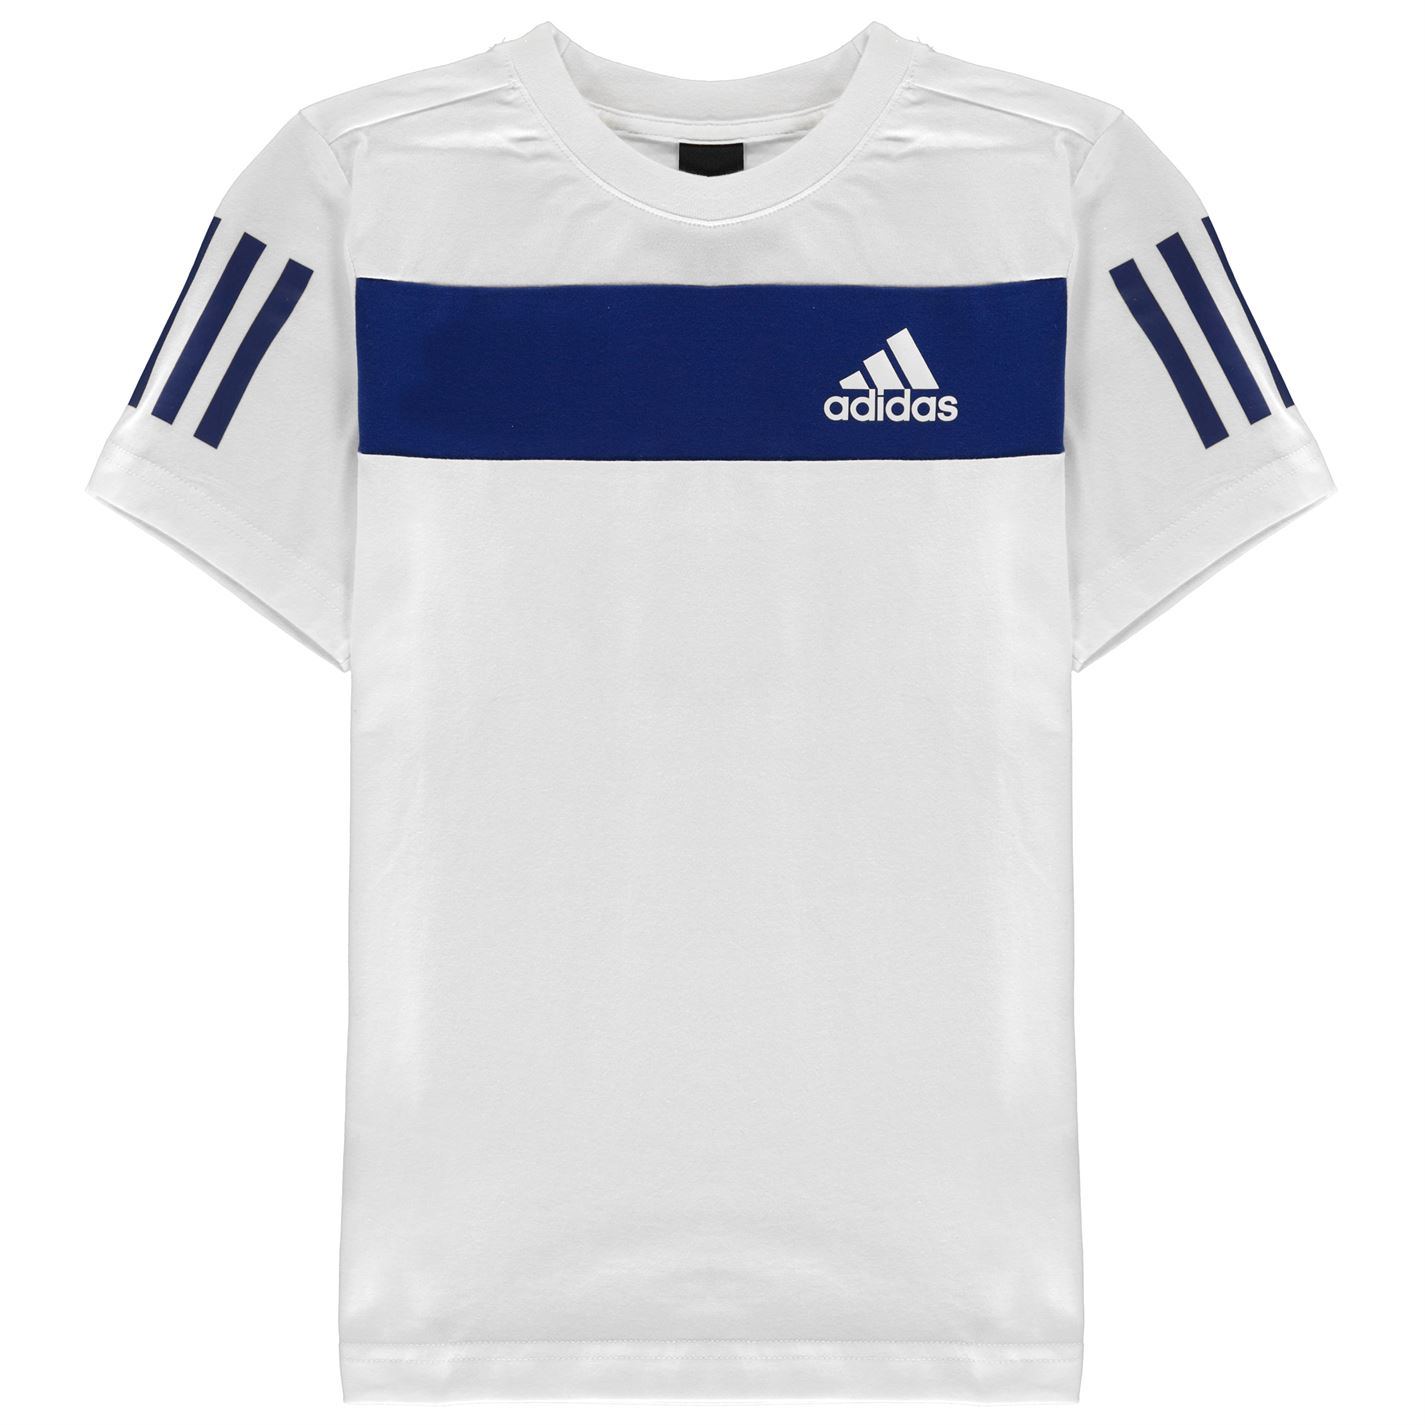 Adidas 3S Logo T Shirt Junior Boys